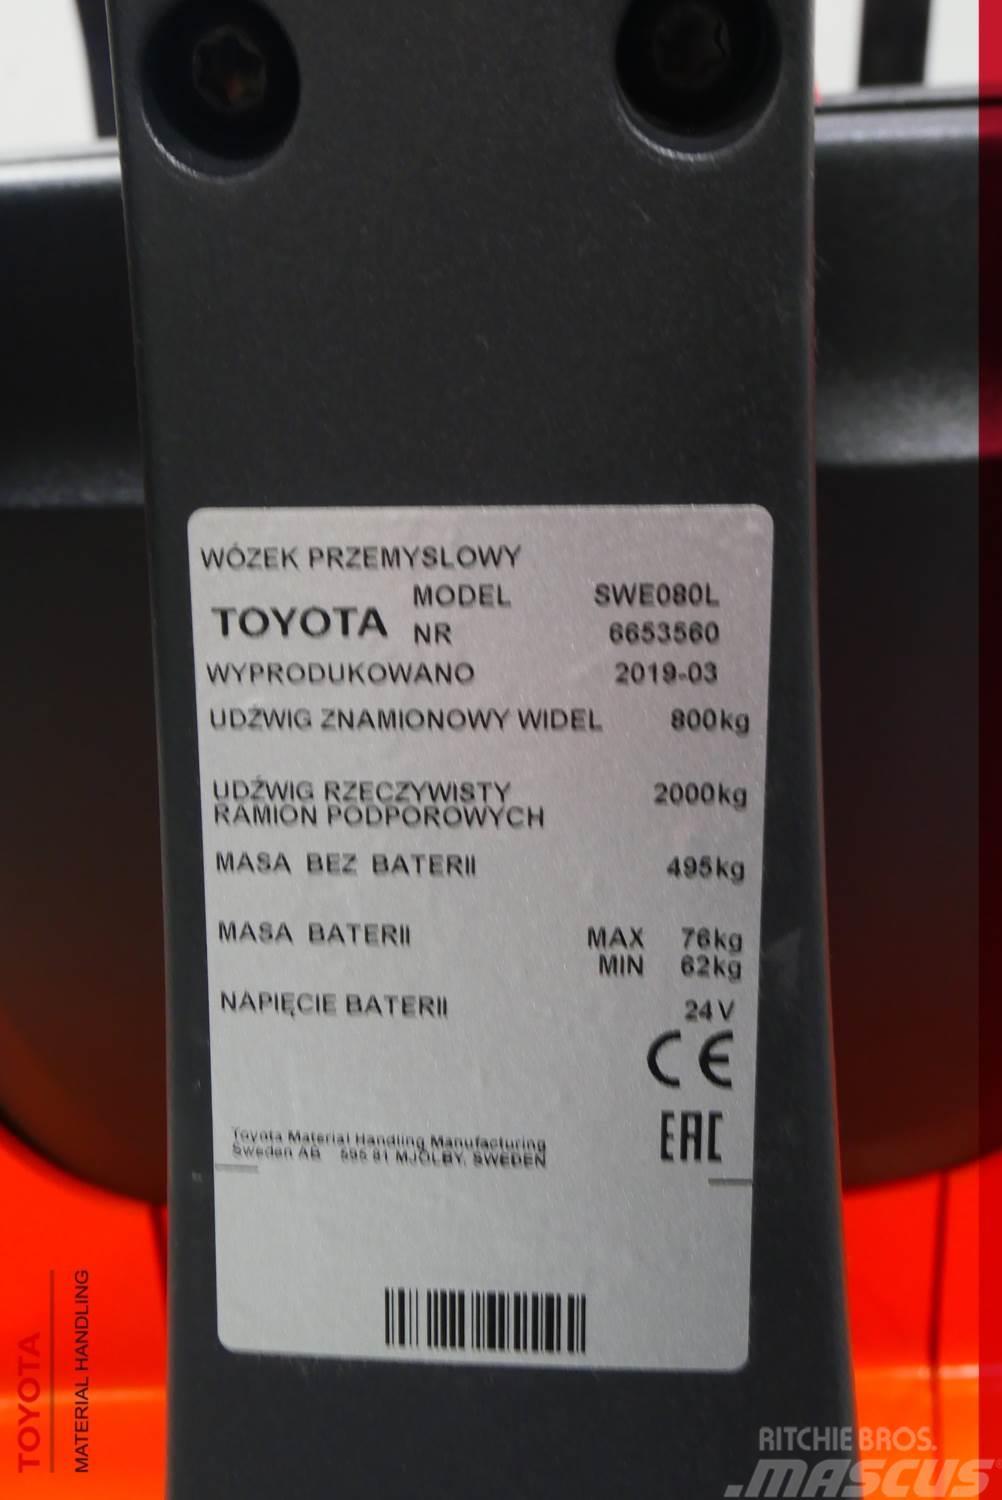 Toyota SWE080L Lithium-ion Yaya kumandali istif makinasi